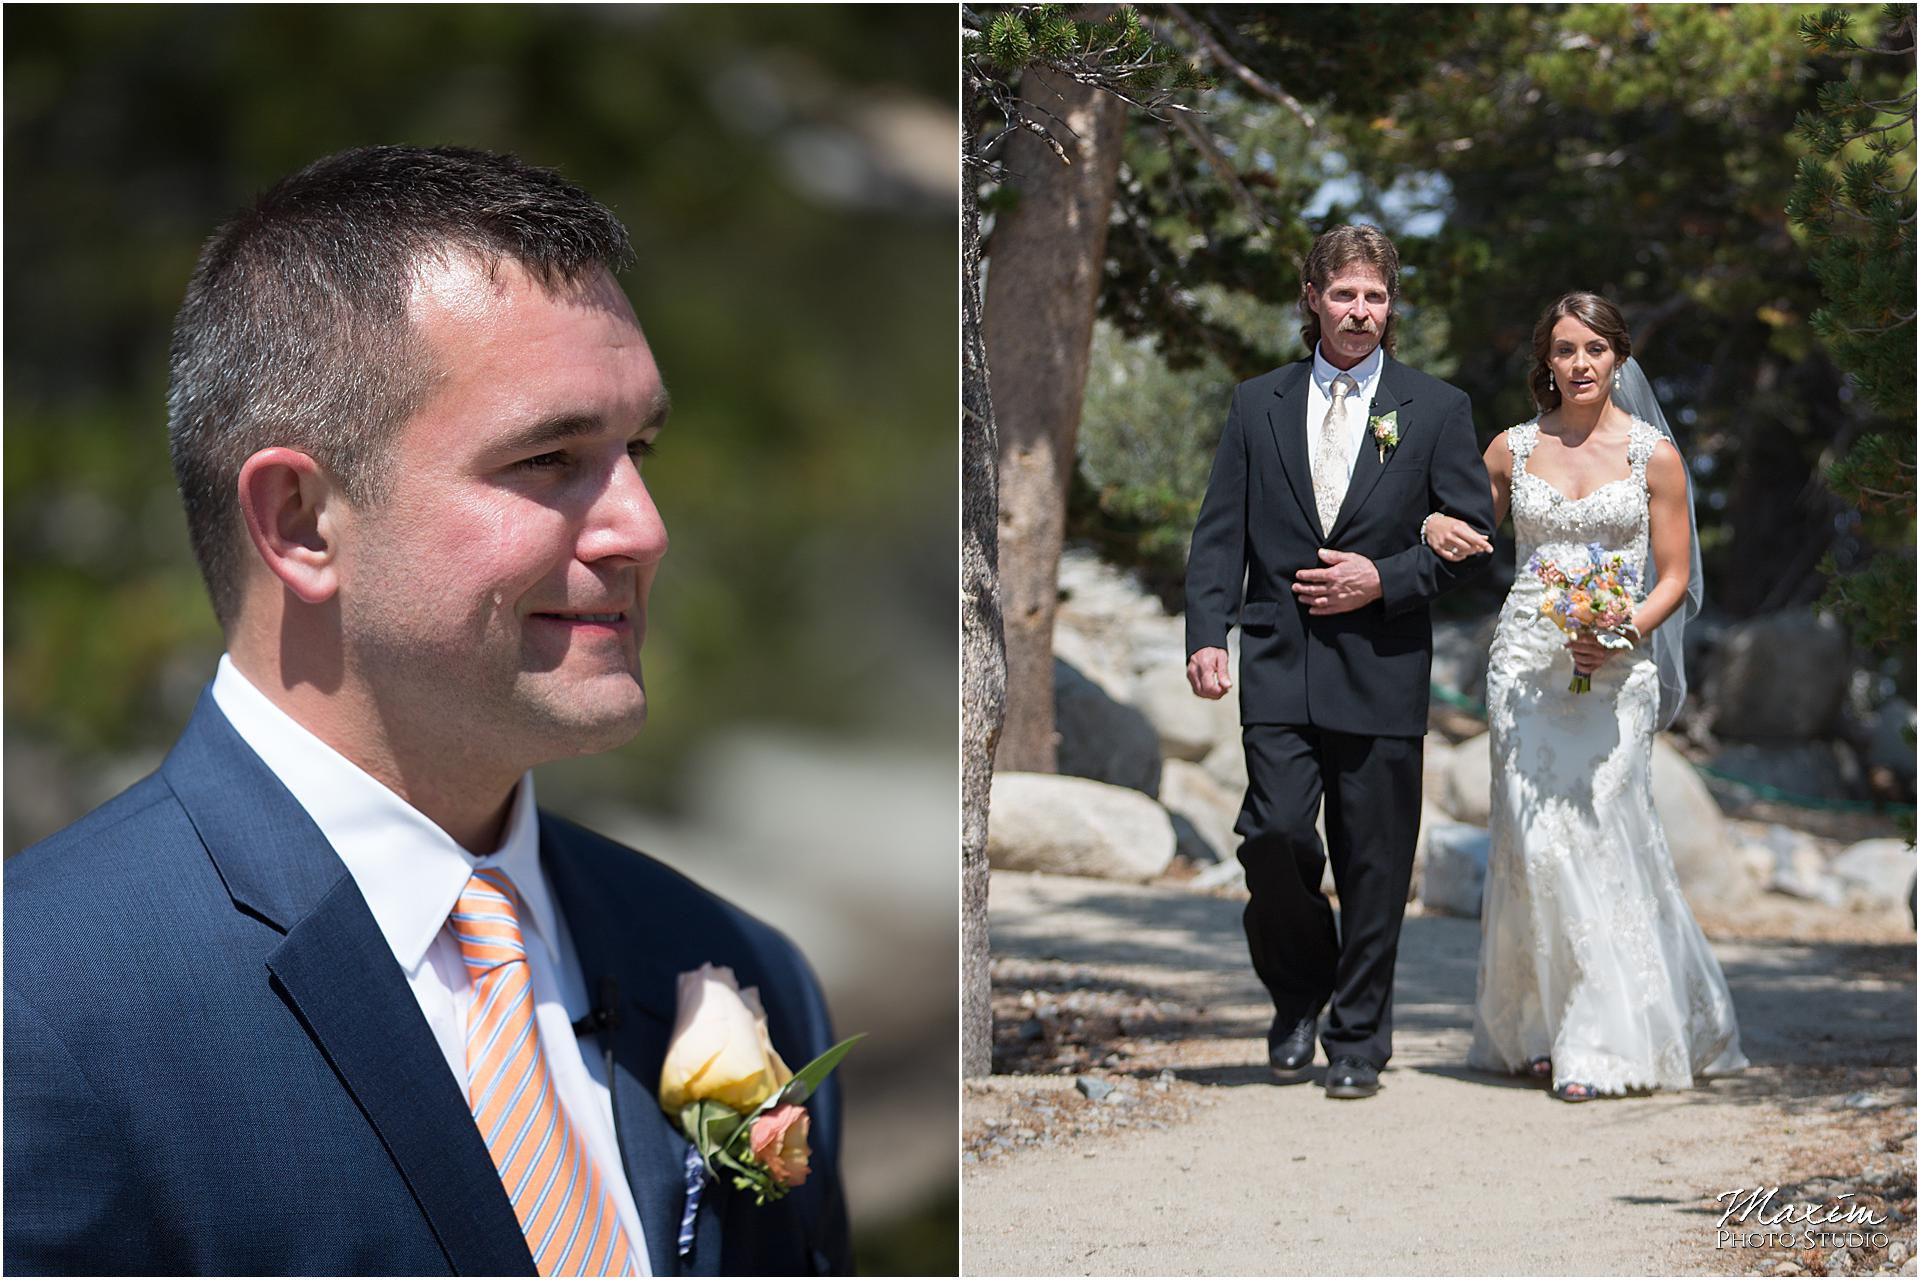 Lake Tahoe Heavenly Village Destination Wedding Ceremony